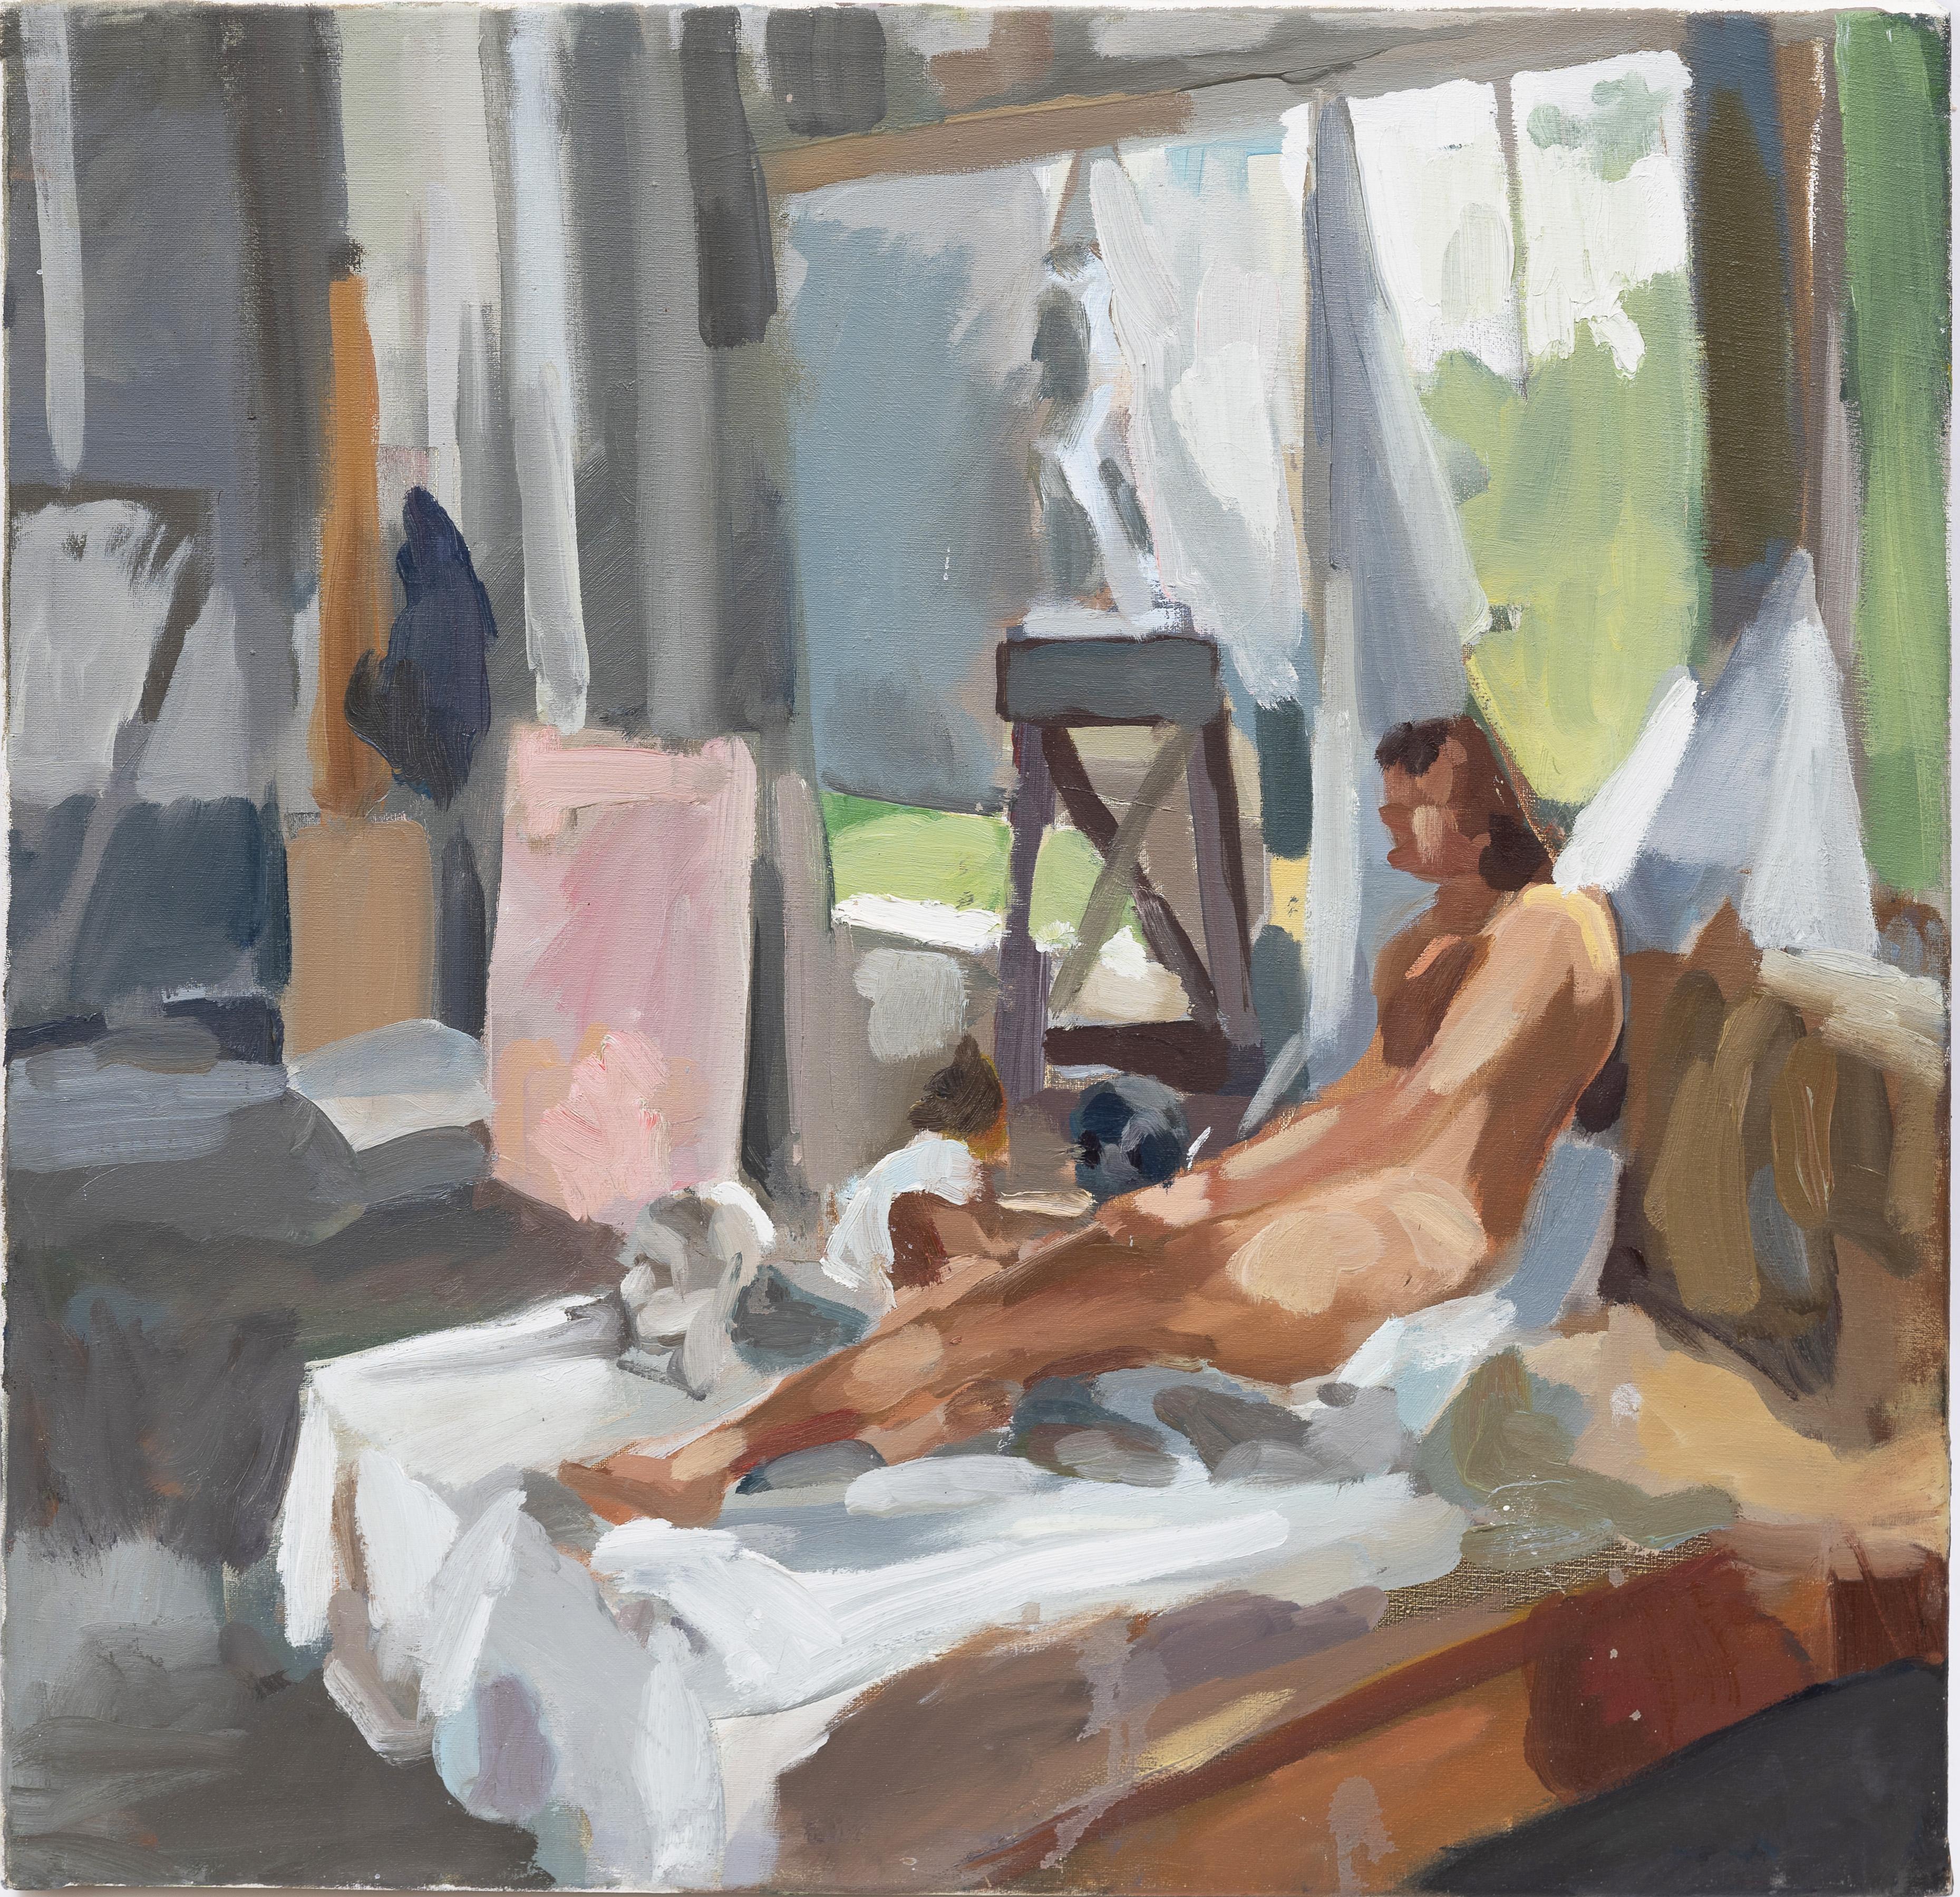 Antique American modernist nude interior scene.  Oil on canvas.  Unframed.  No signature found.